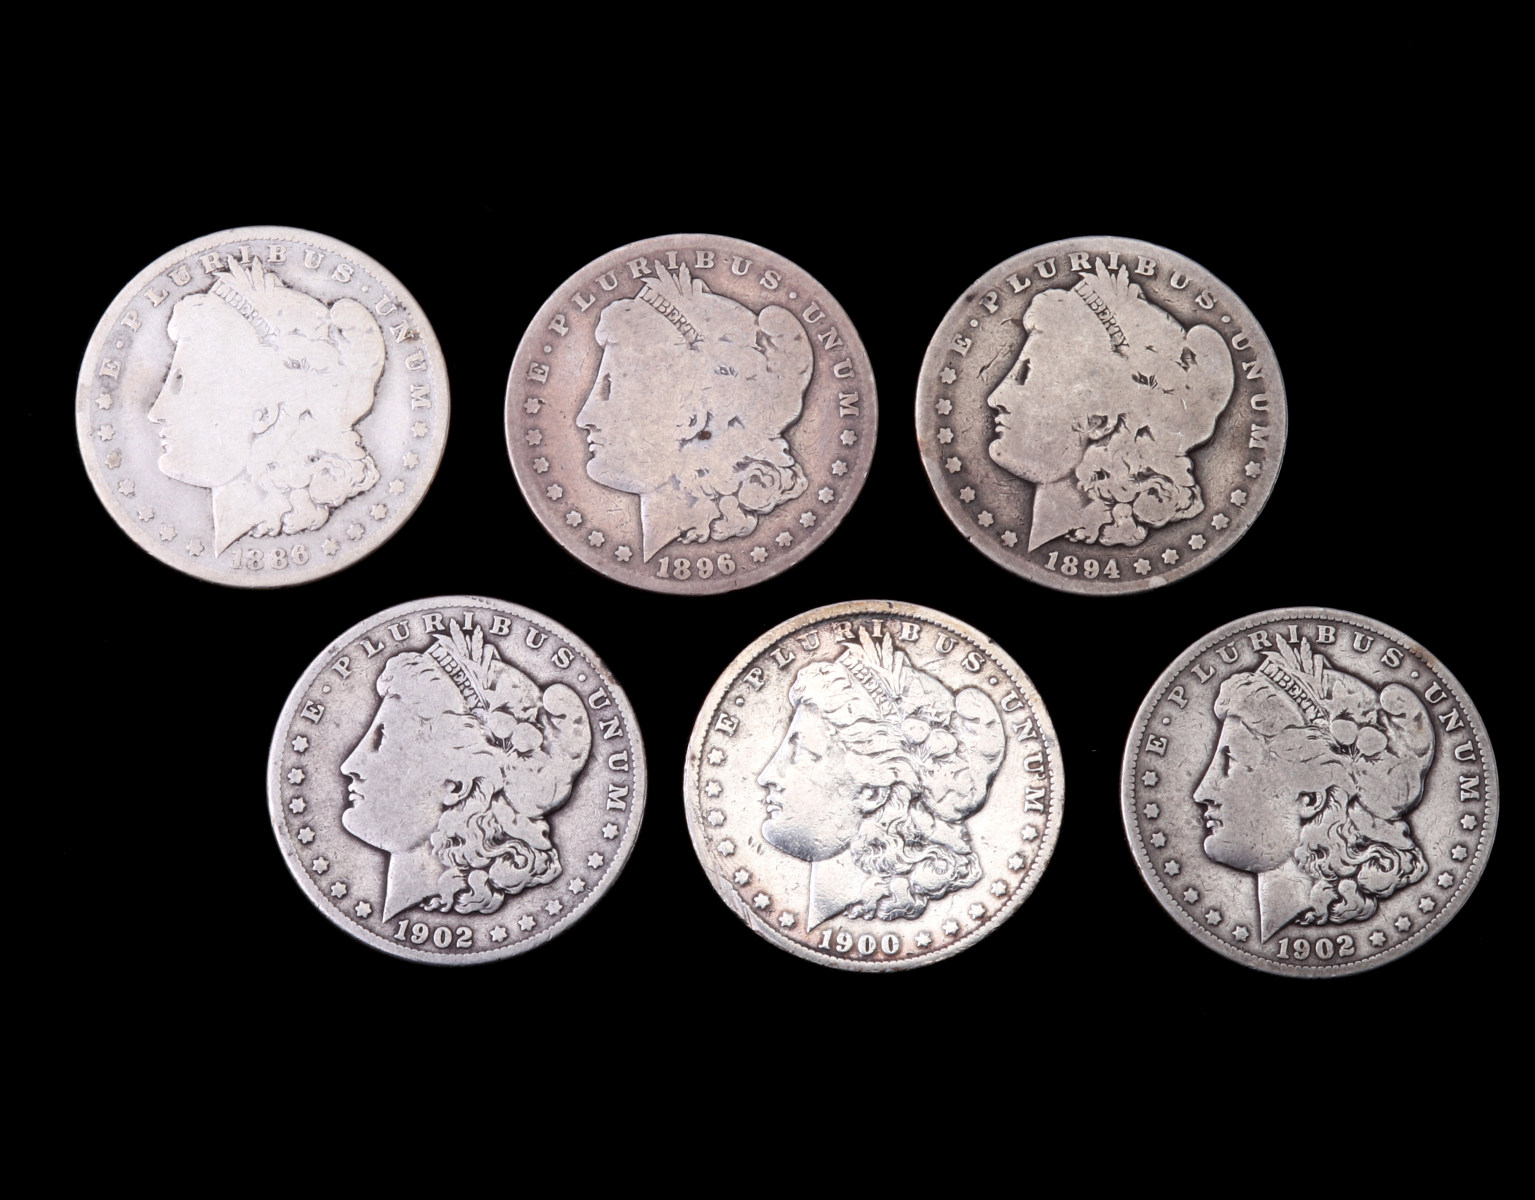 SIX MORGAN SILVER DOLLARS, 1886-1902